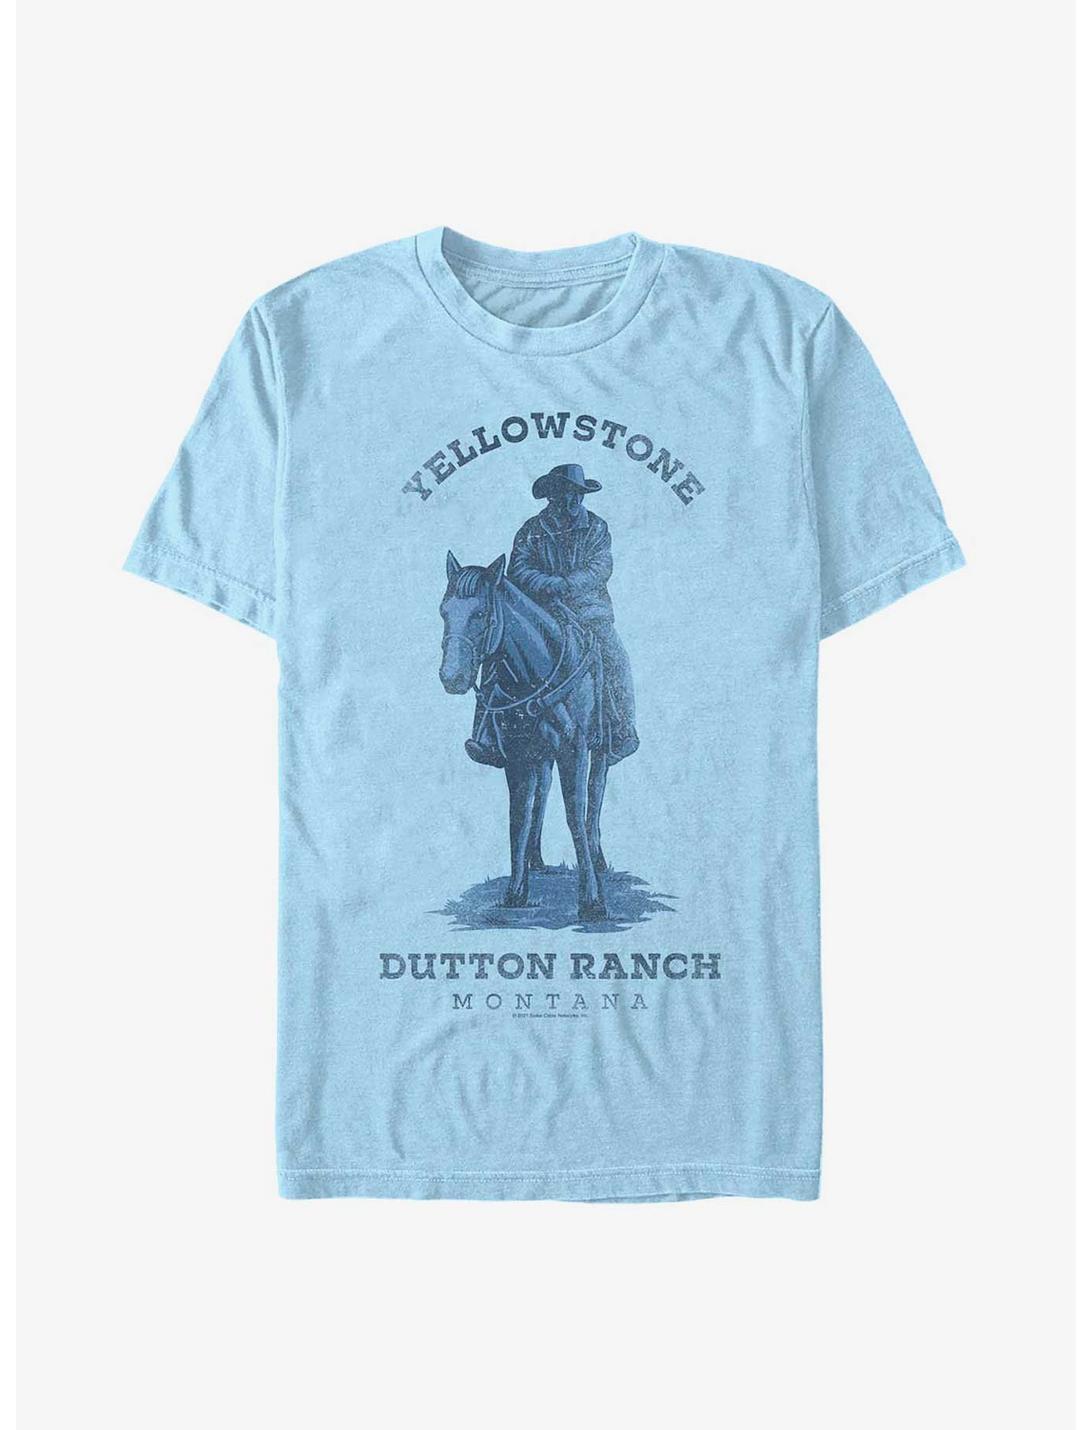 Yellowstone Dutton Ranch T-Shirt, LT BLUE, hi-res